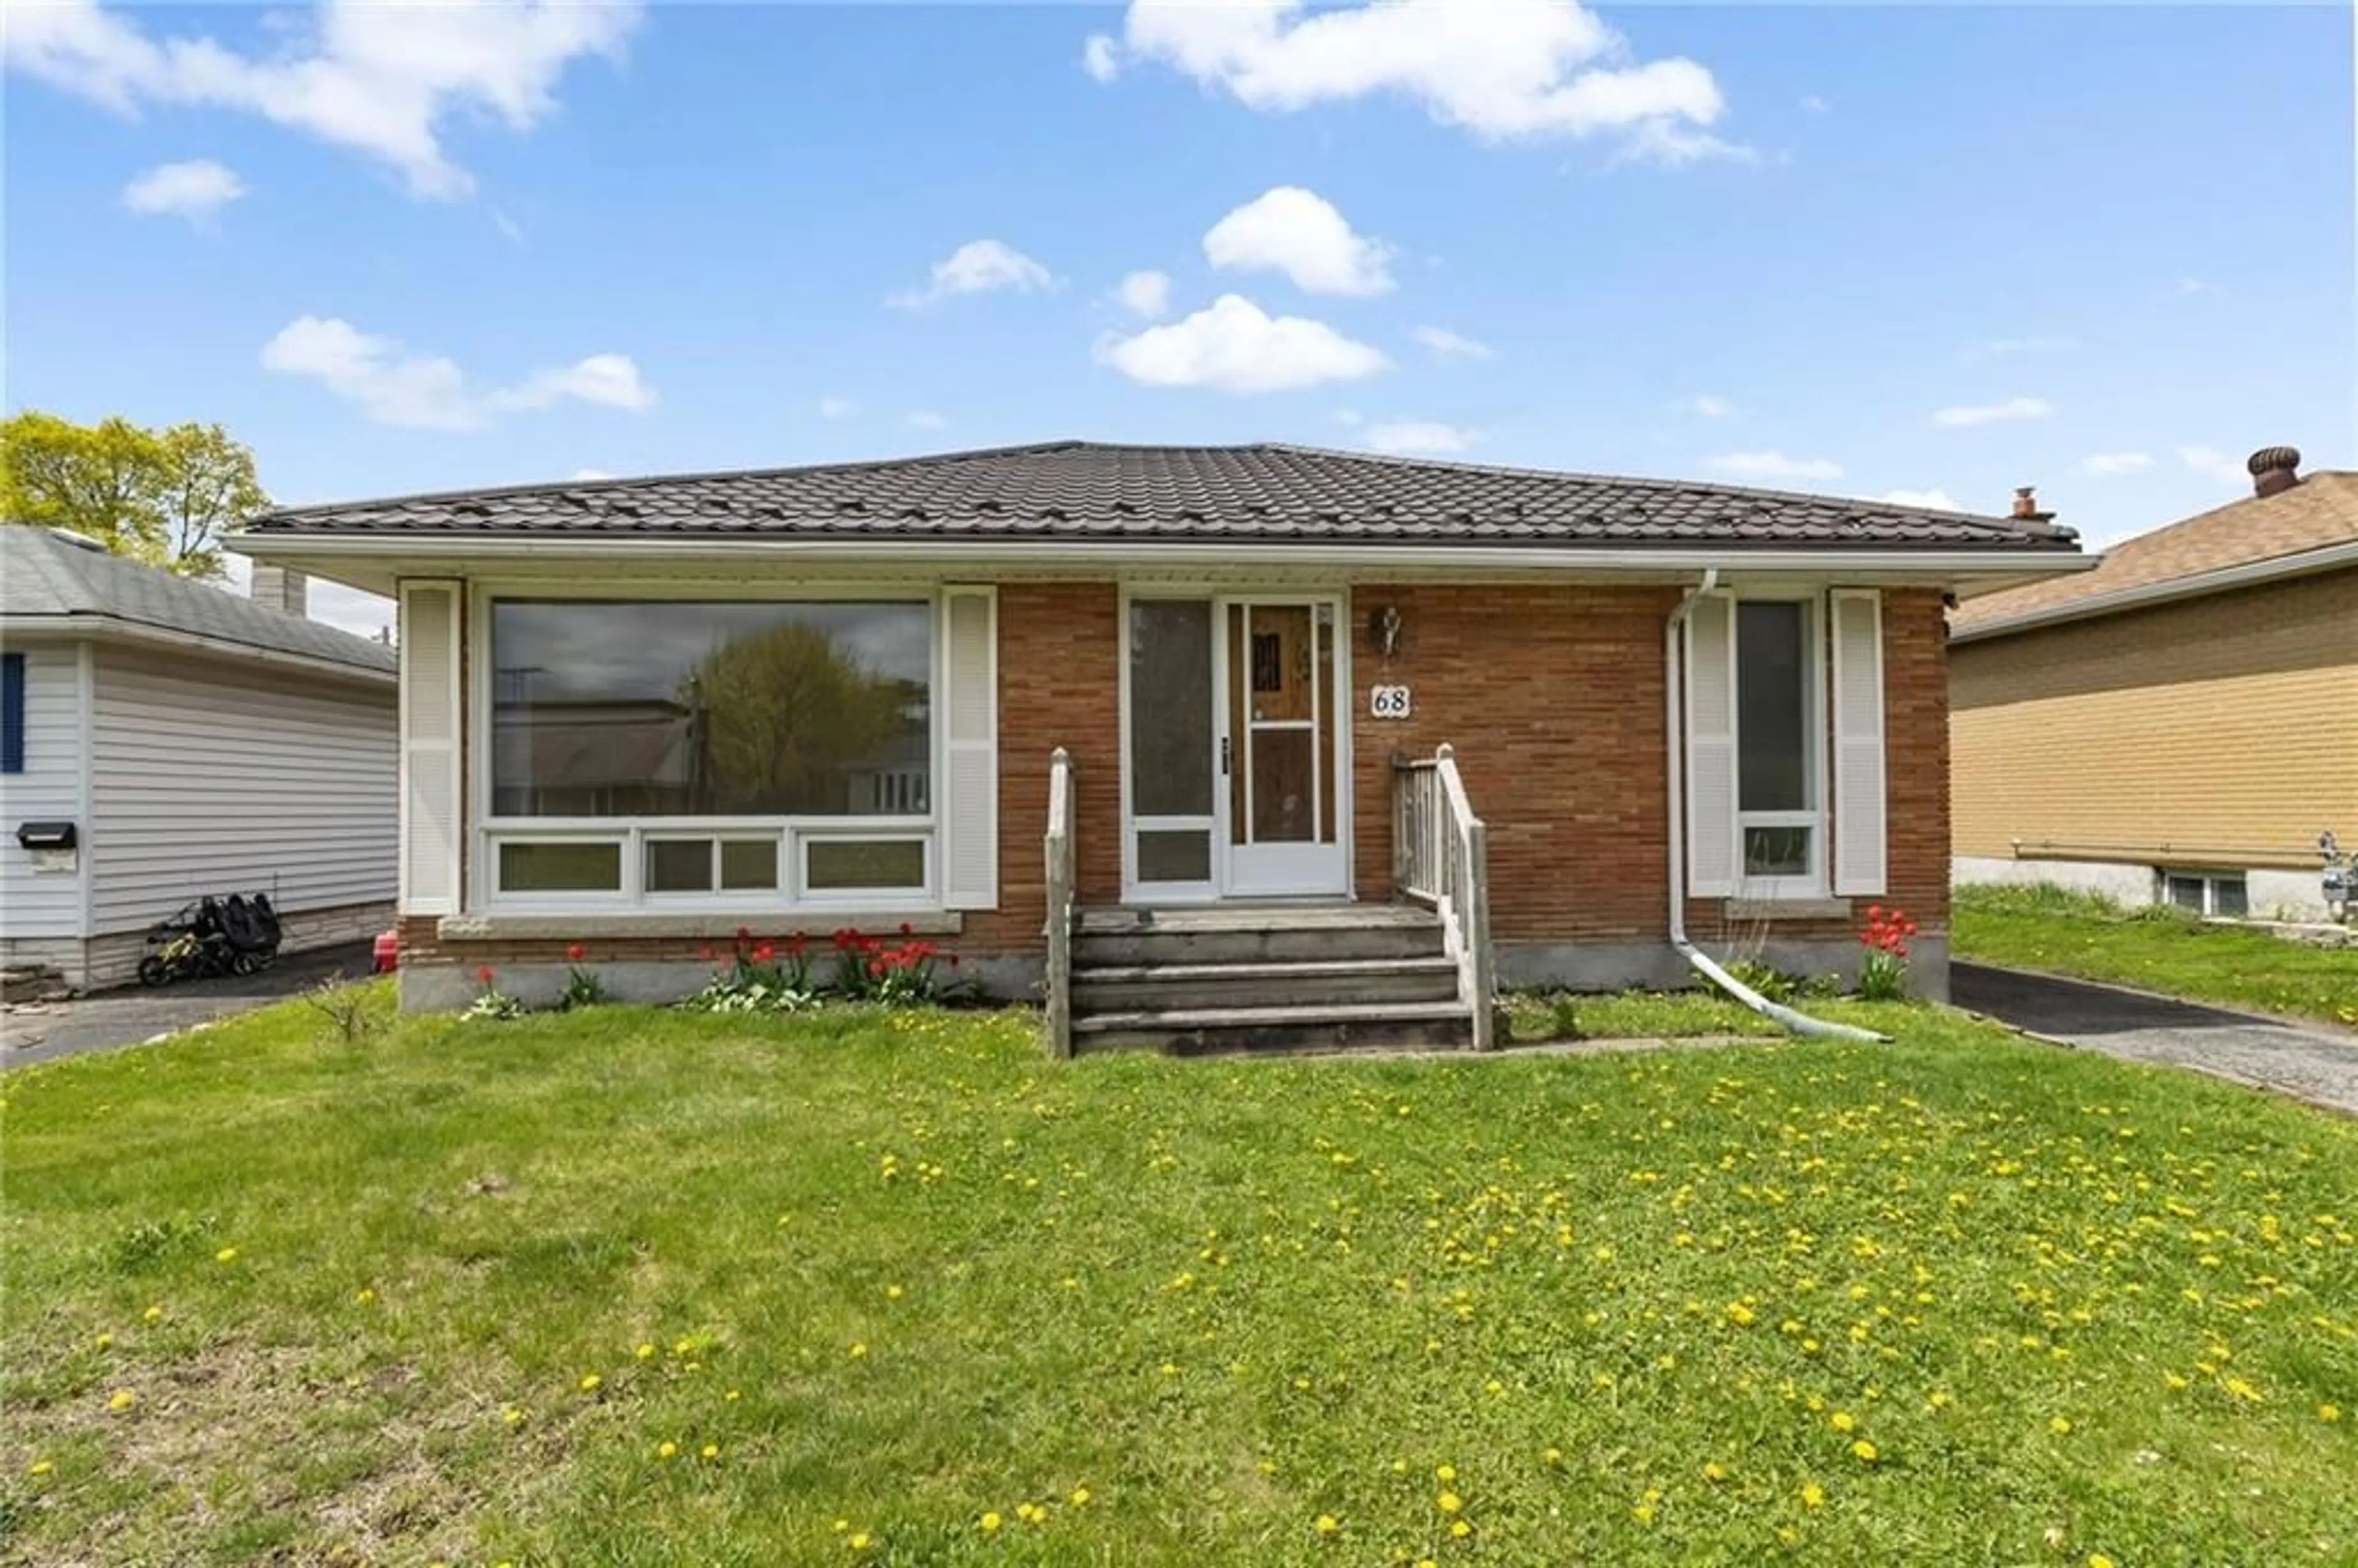 Home with brick exterior material for 68 ALDERSHOT Ave, Brockville Ontario K6V 2P8